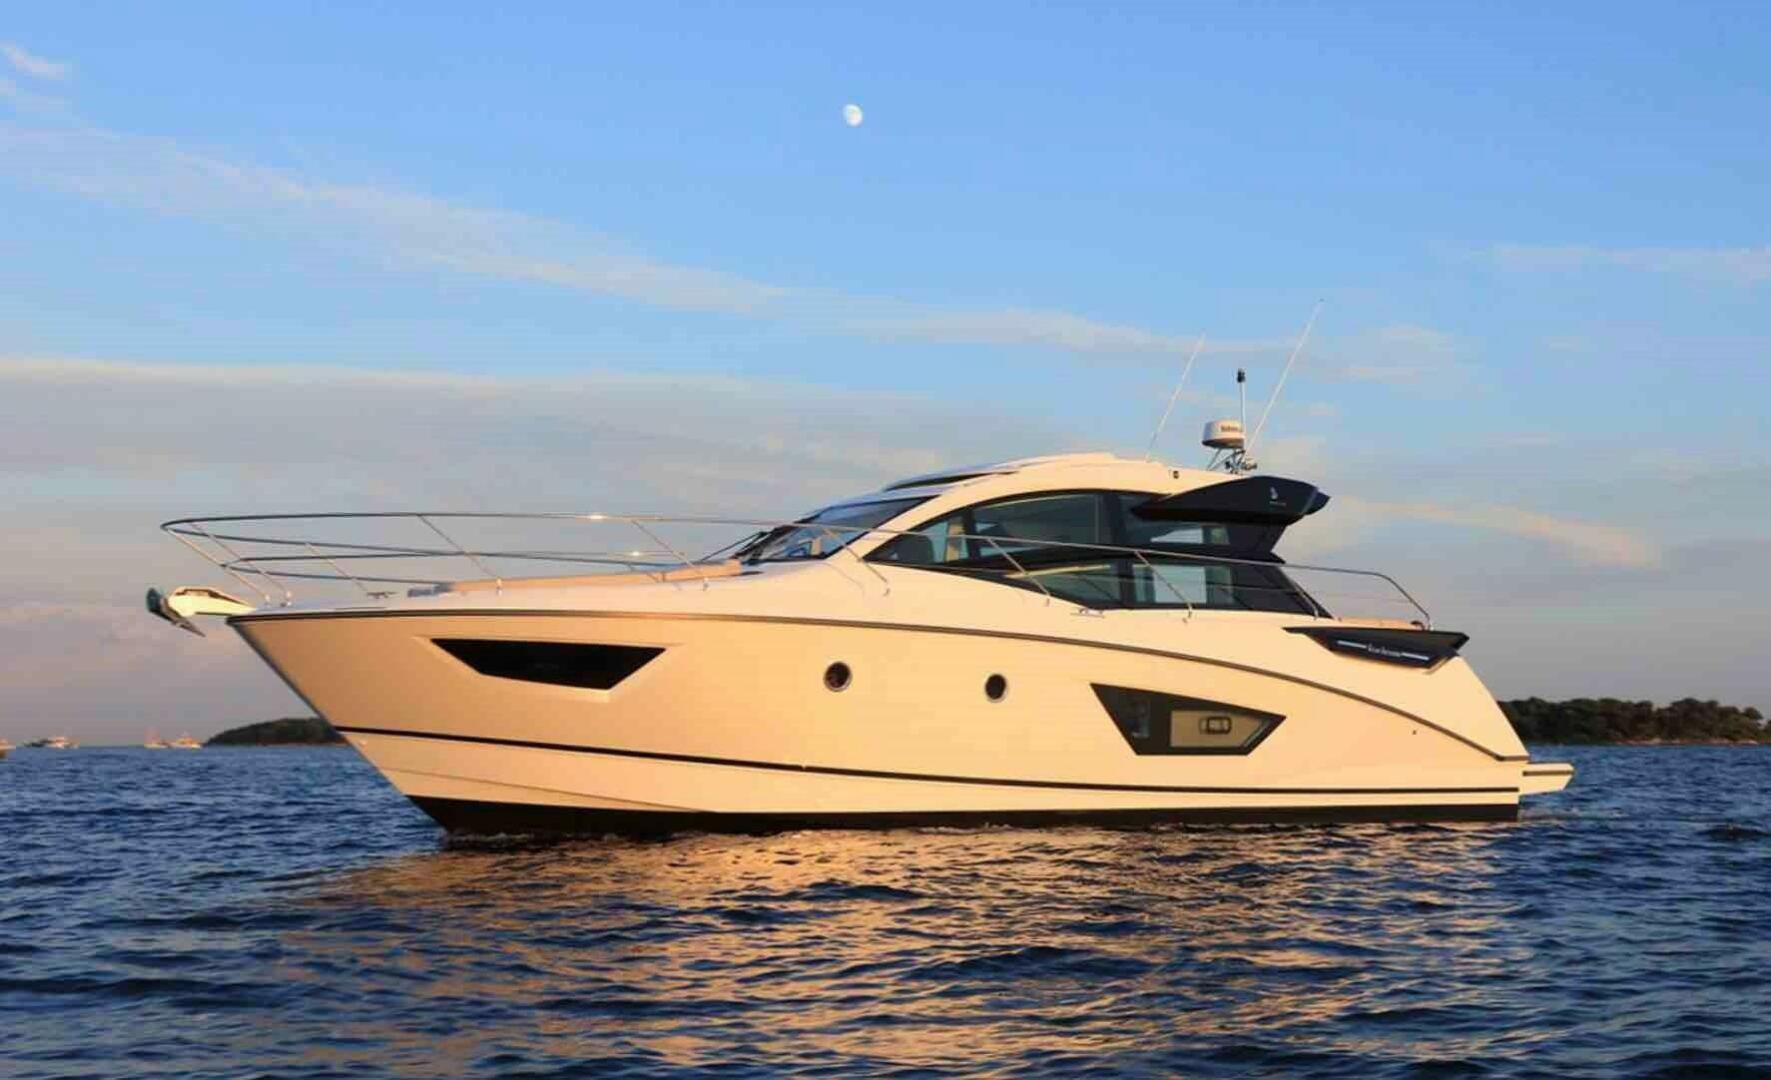 Beneteau Gran Turismo 50: A Nice Motor Yacht To Charter